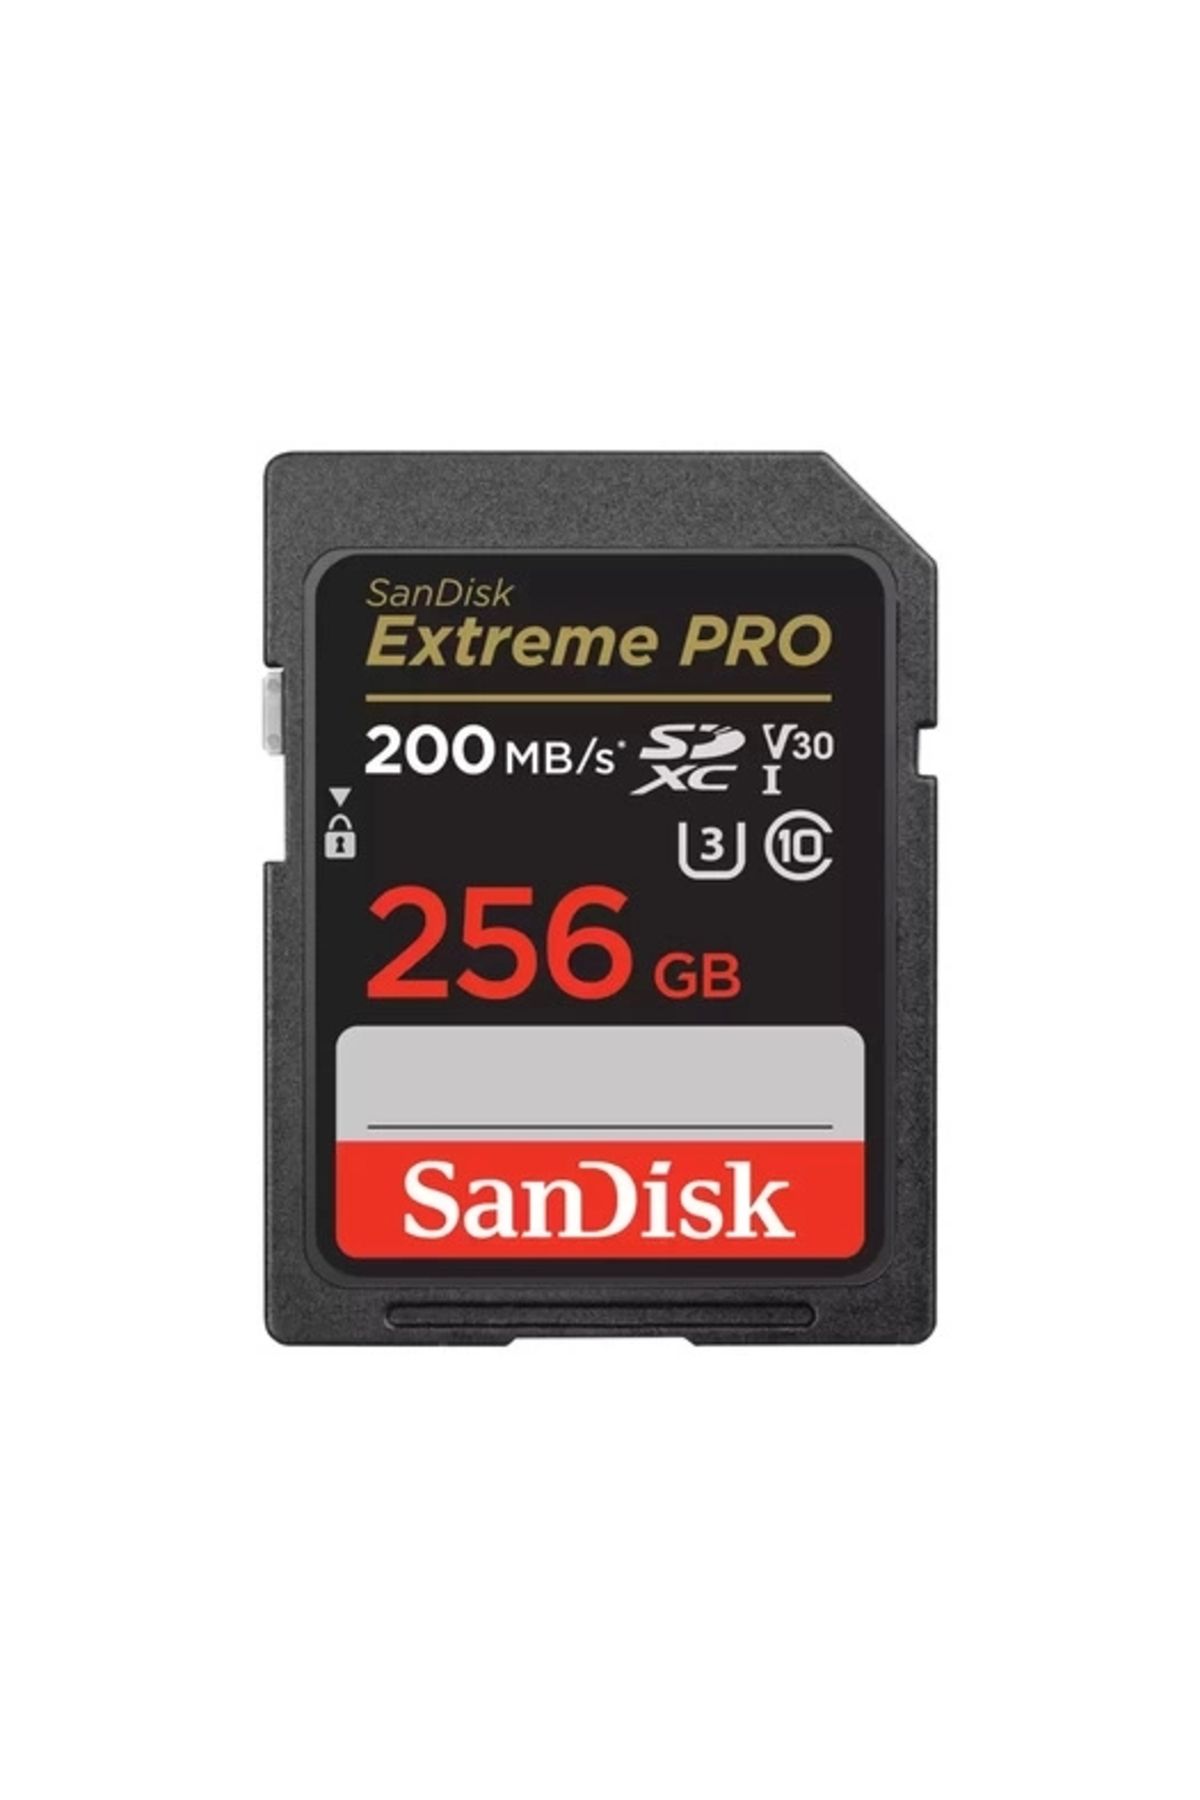 Sandisk Extreme Pro SD UHS I 256GB Card